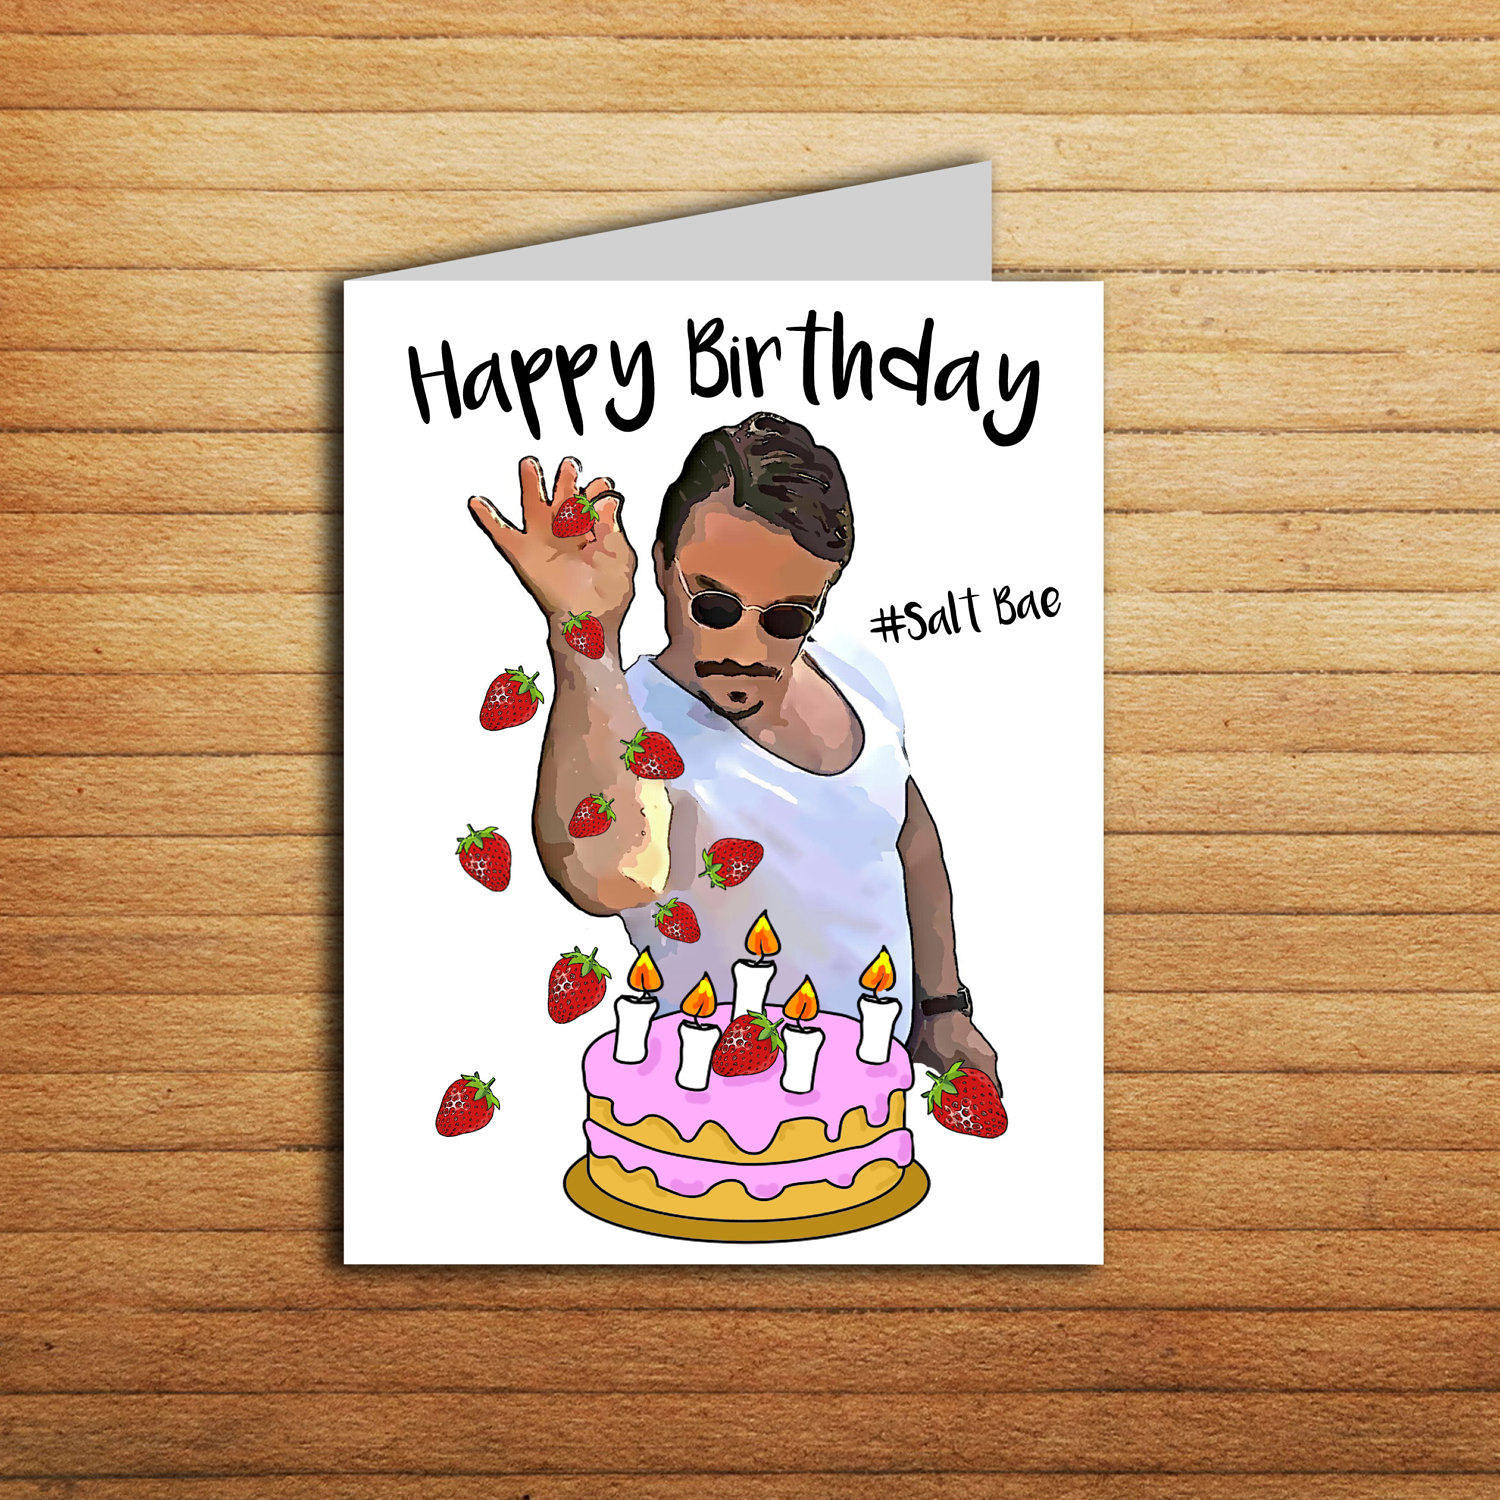 Funny Birthday Card Printable
 Salt Bae Birthday Card Printable Funny Birthday Card for